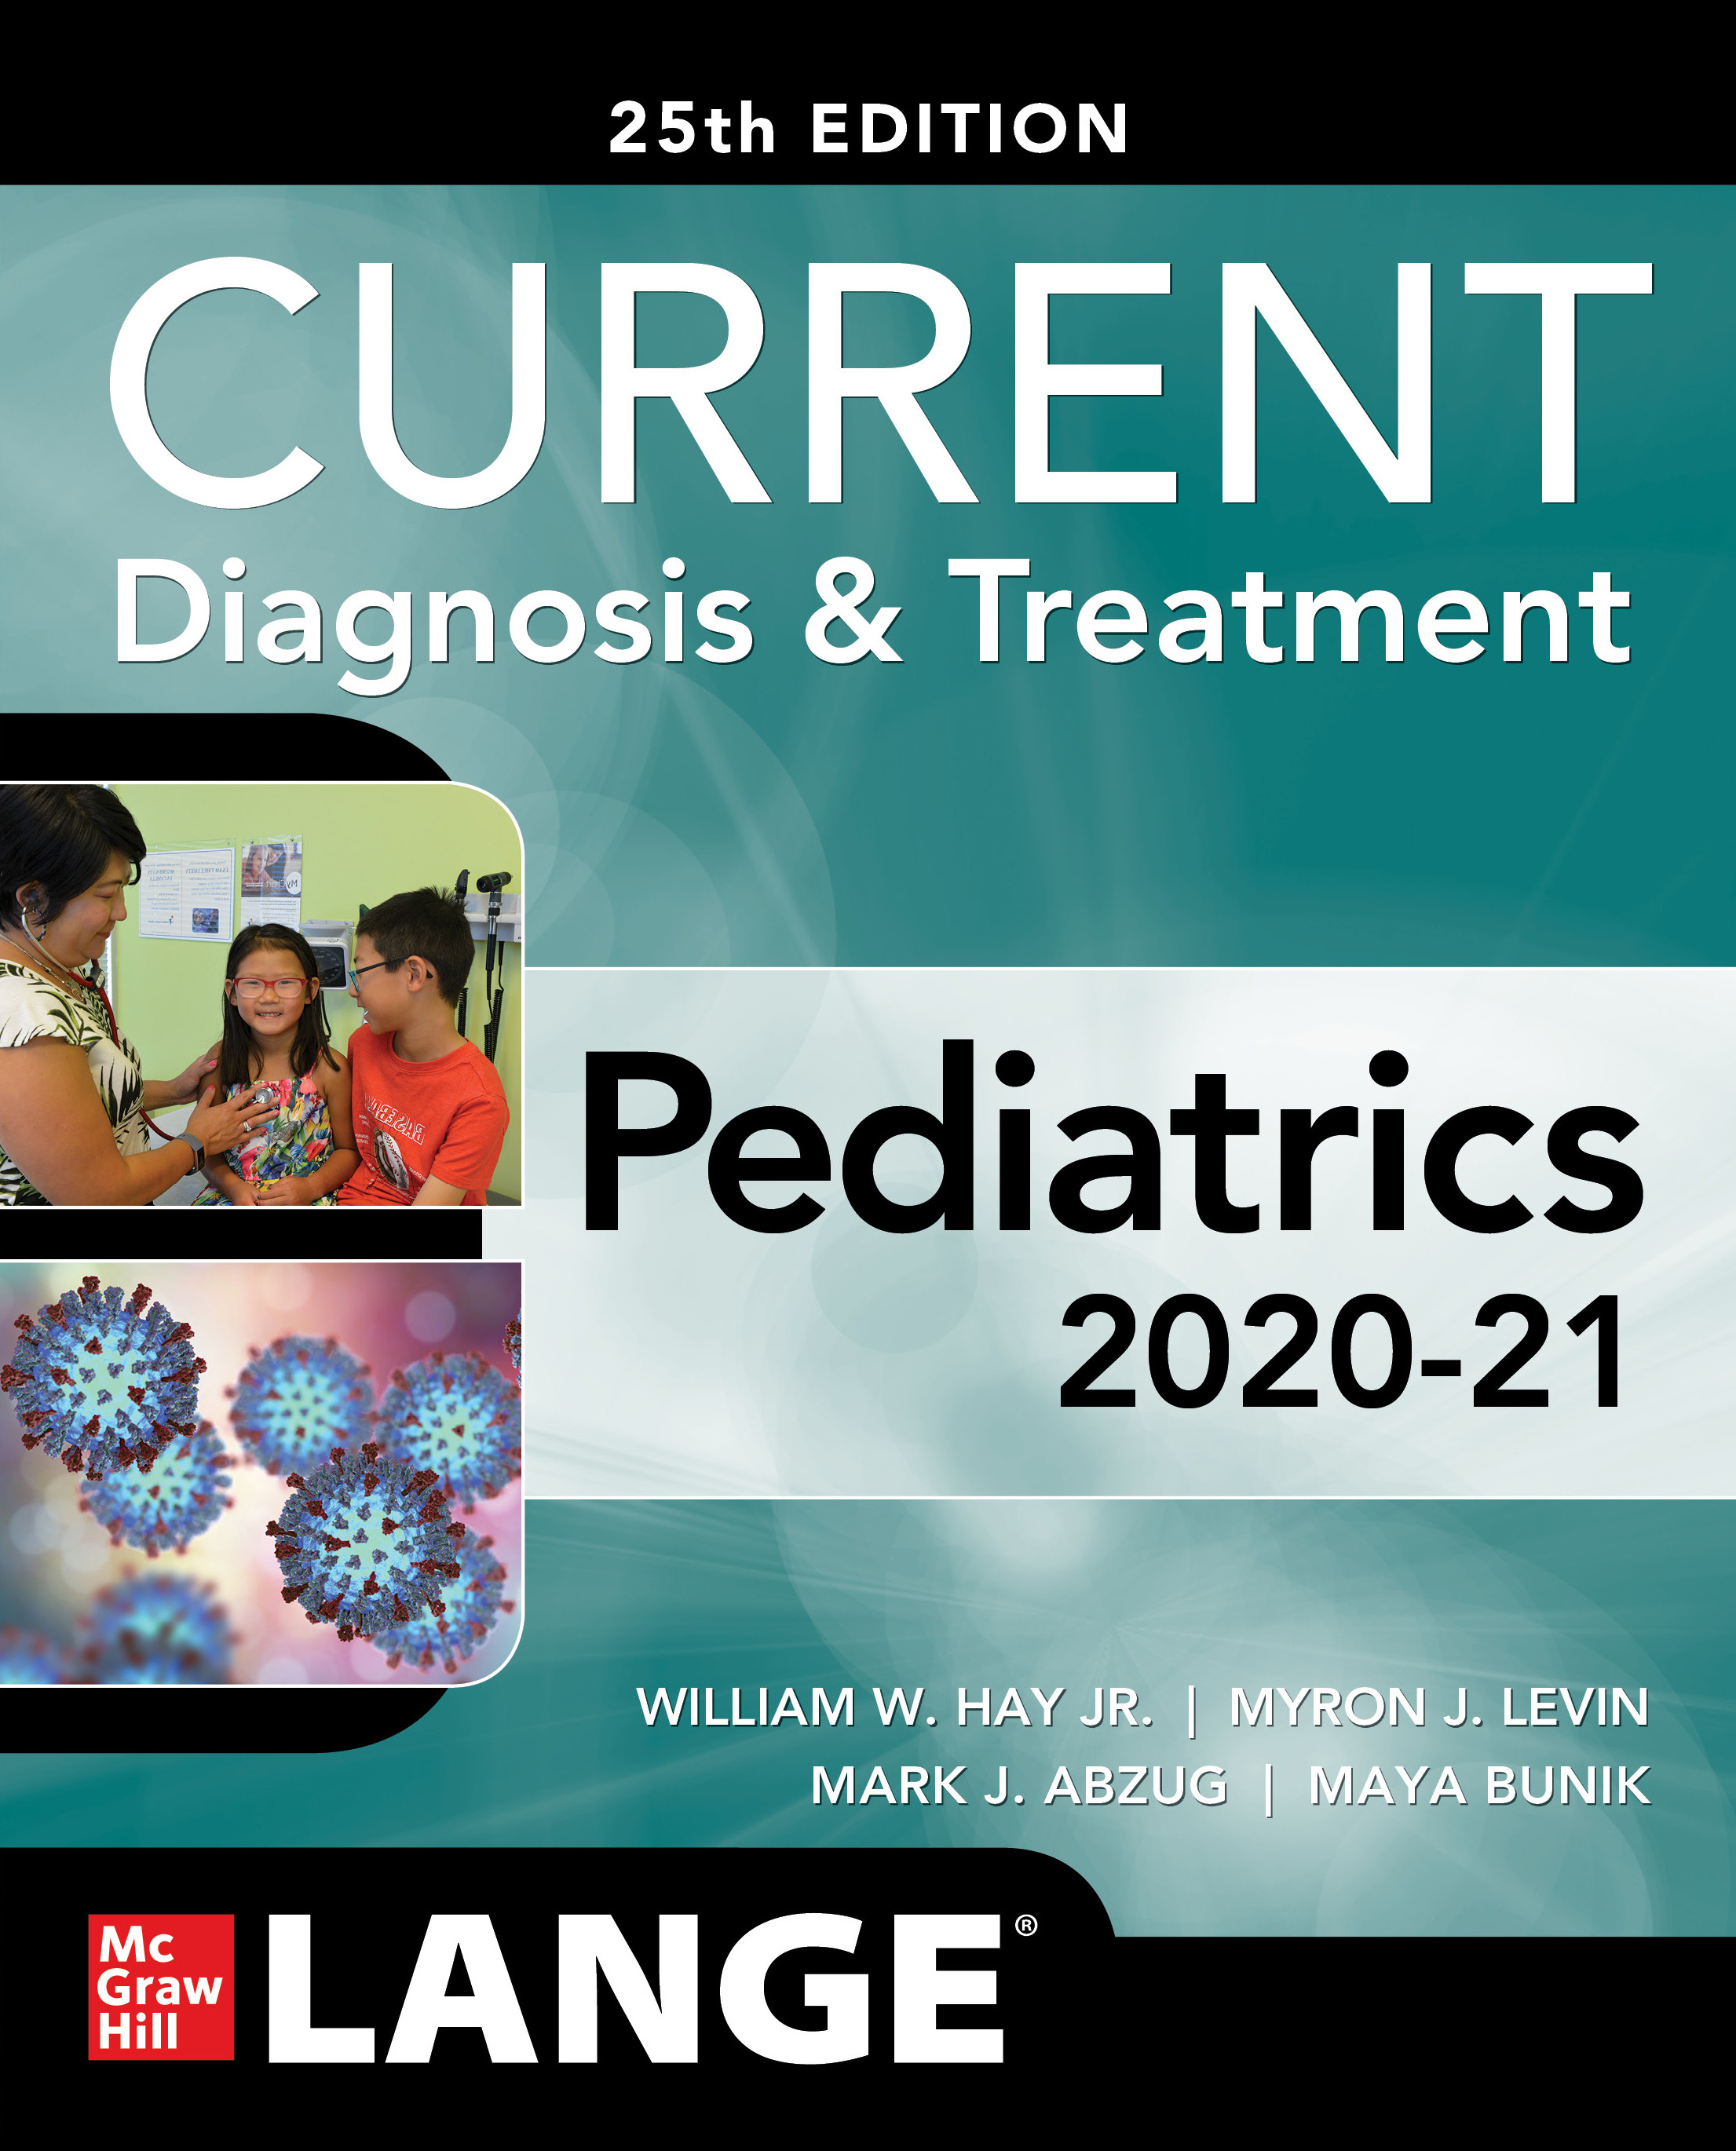 Current Diagnosis & Treatment in Pediatrics, 2020-2125th ed.